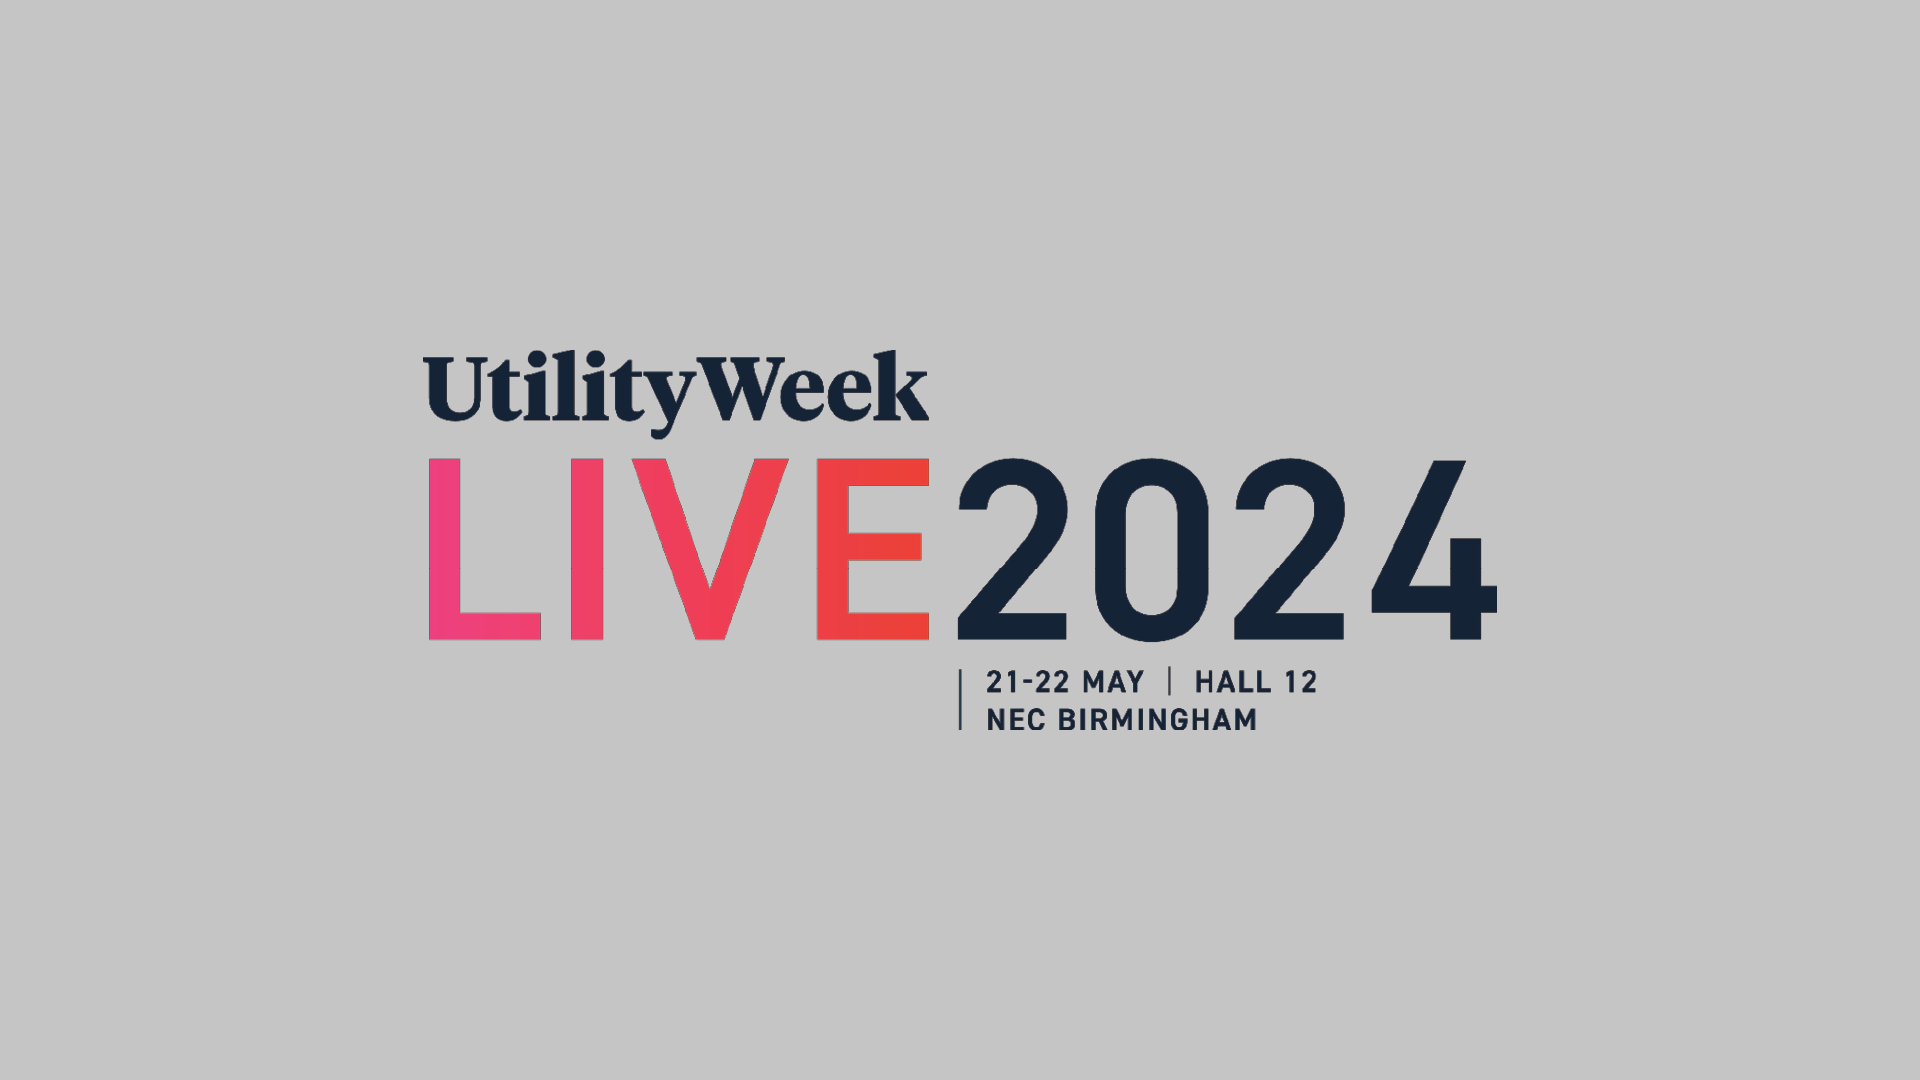 AVK UK Exhibiting At Utility Week Live 2024